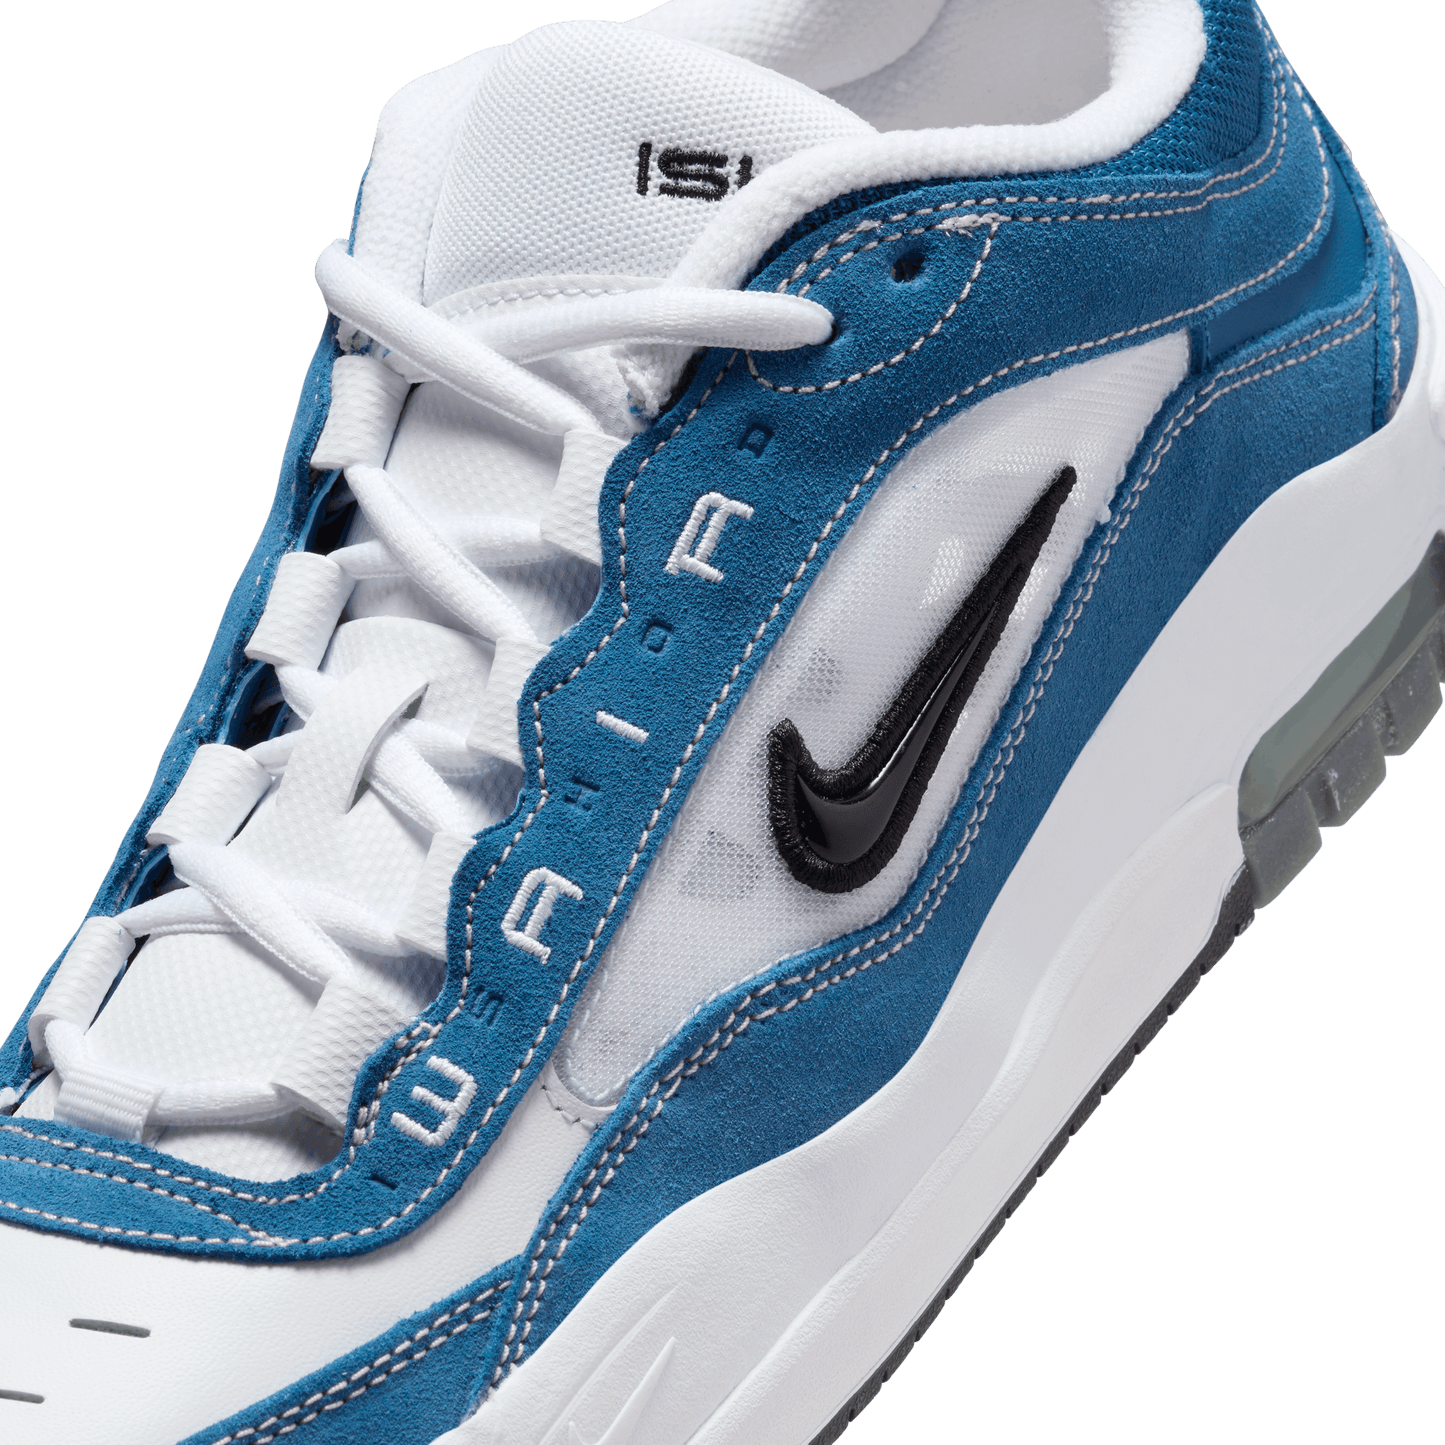 Nike SB Air Max Ishod Star Blue